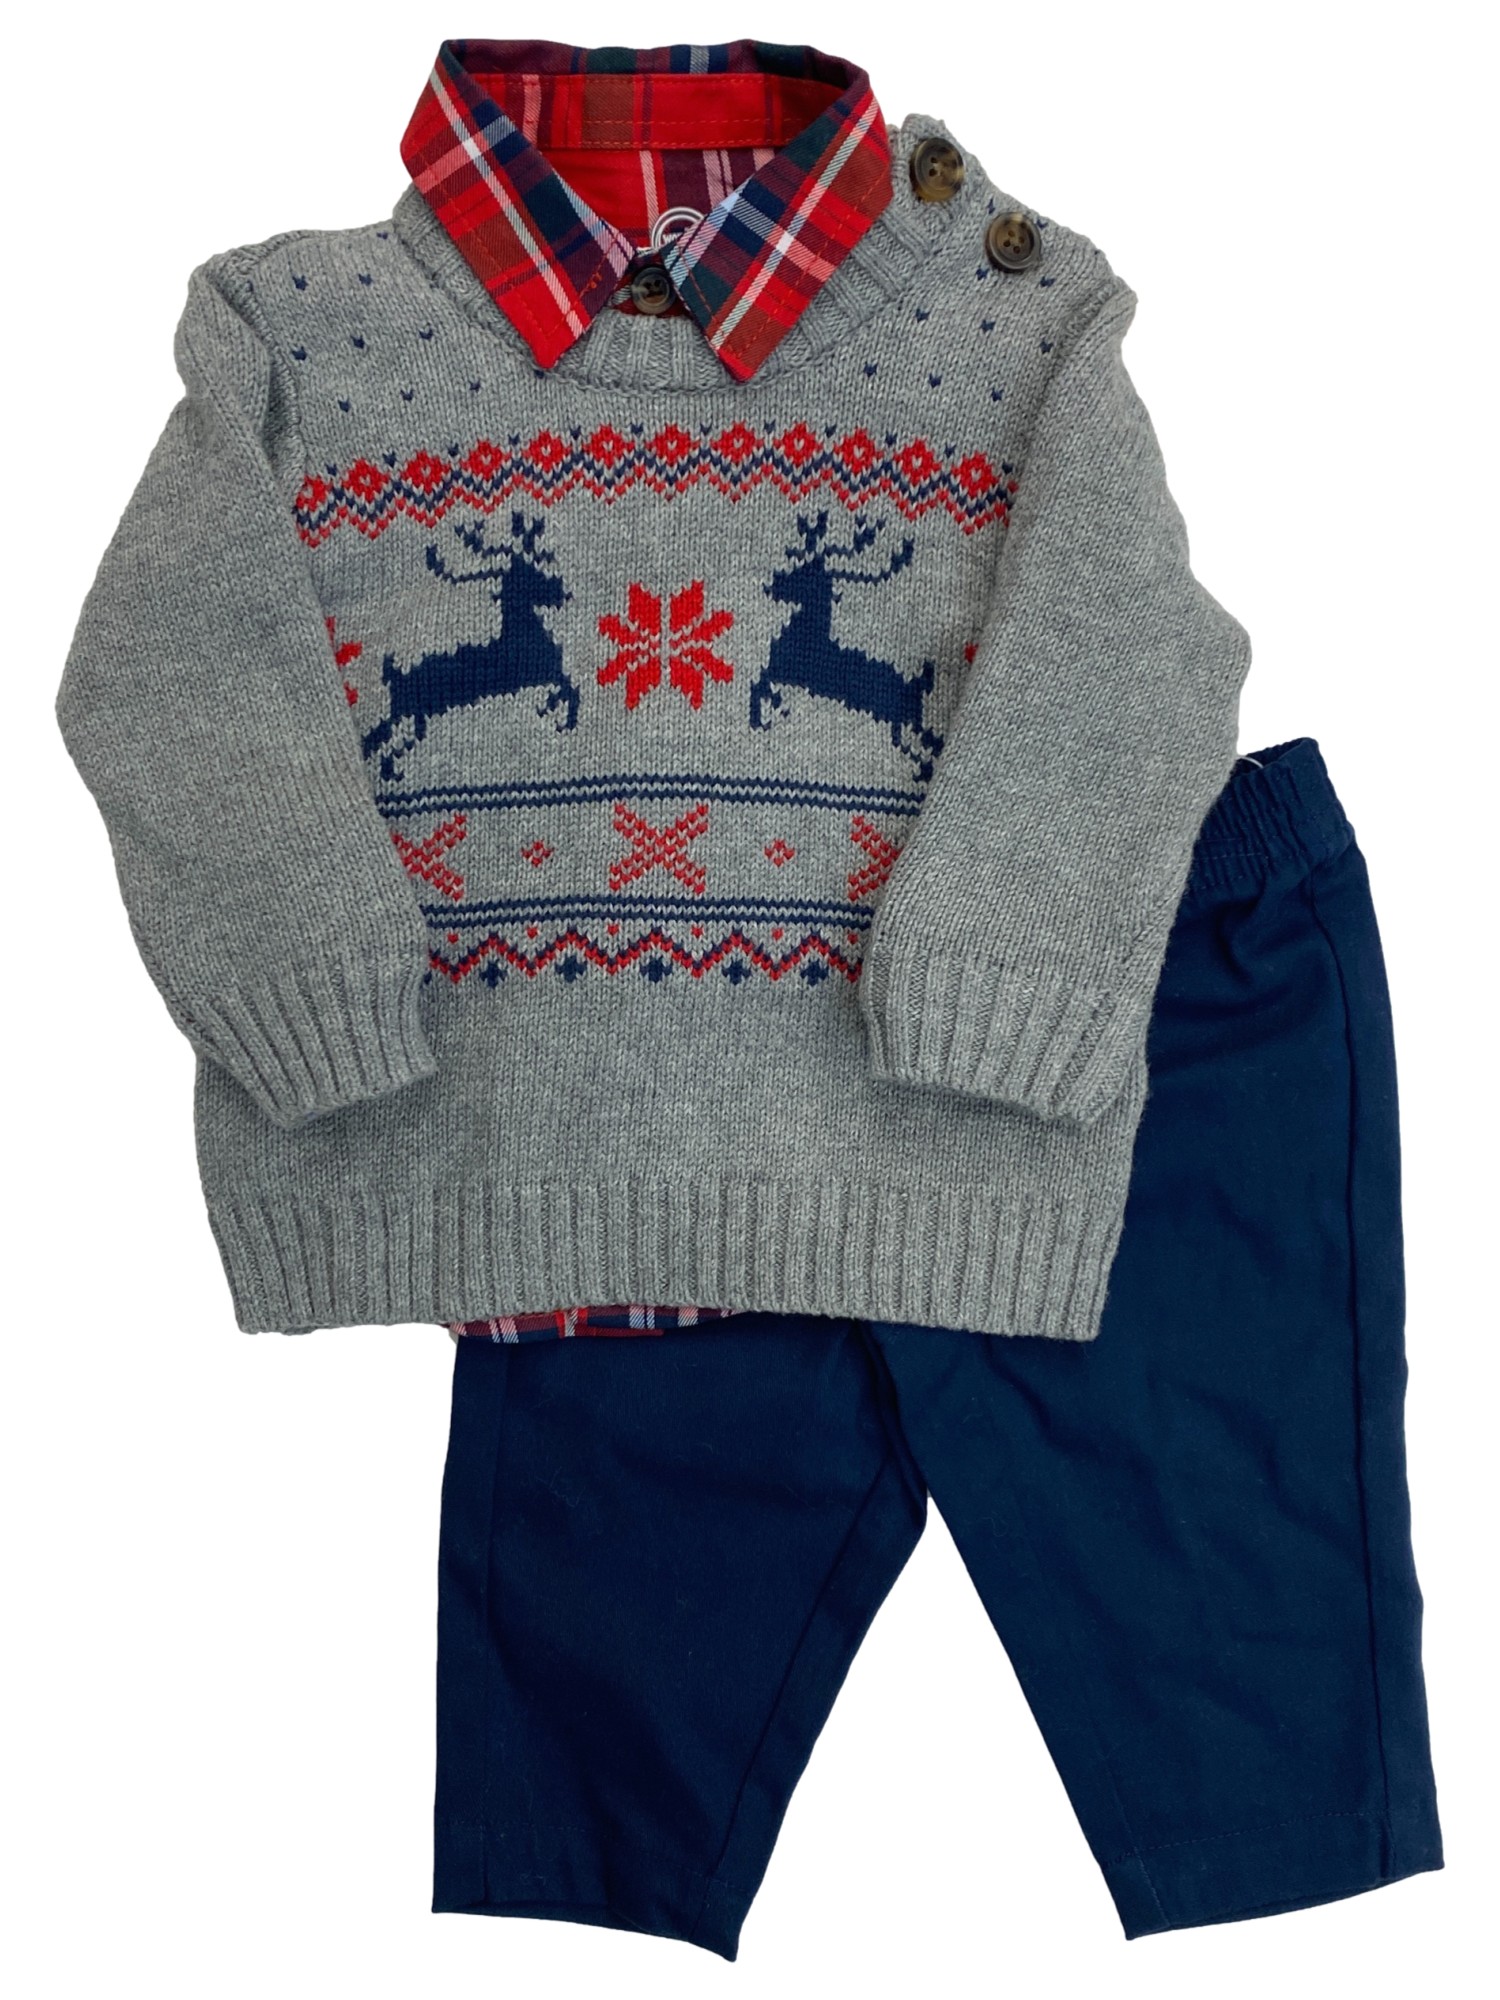 Wonder Nation Infant Boys Dress Up Suit Pants Plaid Shirt Gray Reindeer Sweater Outfit 0-3m